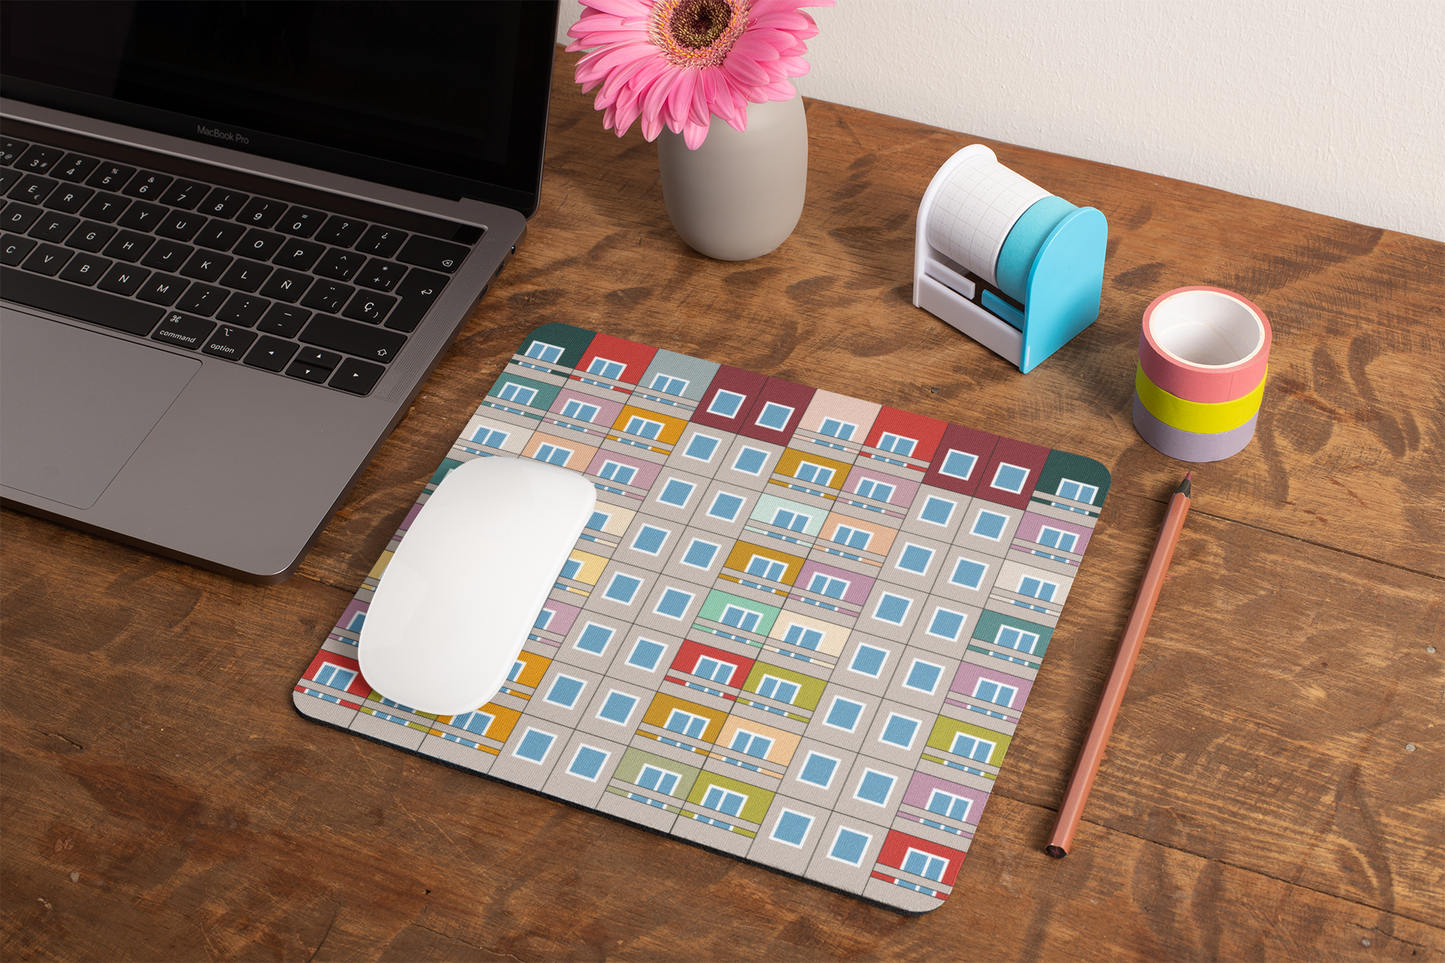 Mousepad: Colorful plate